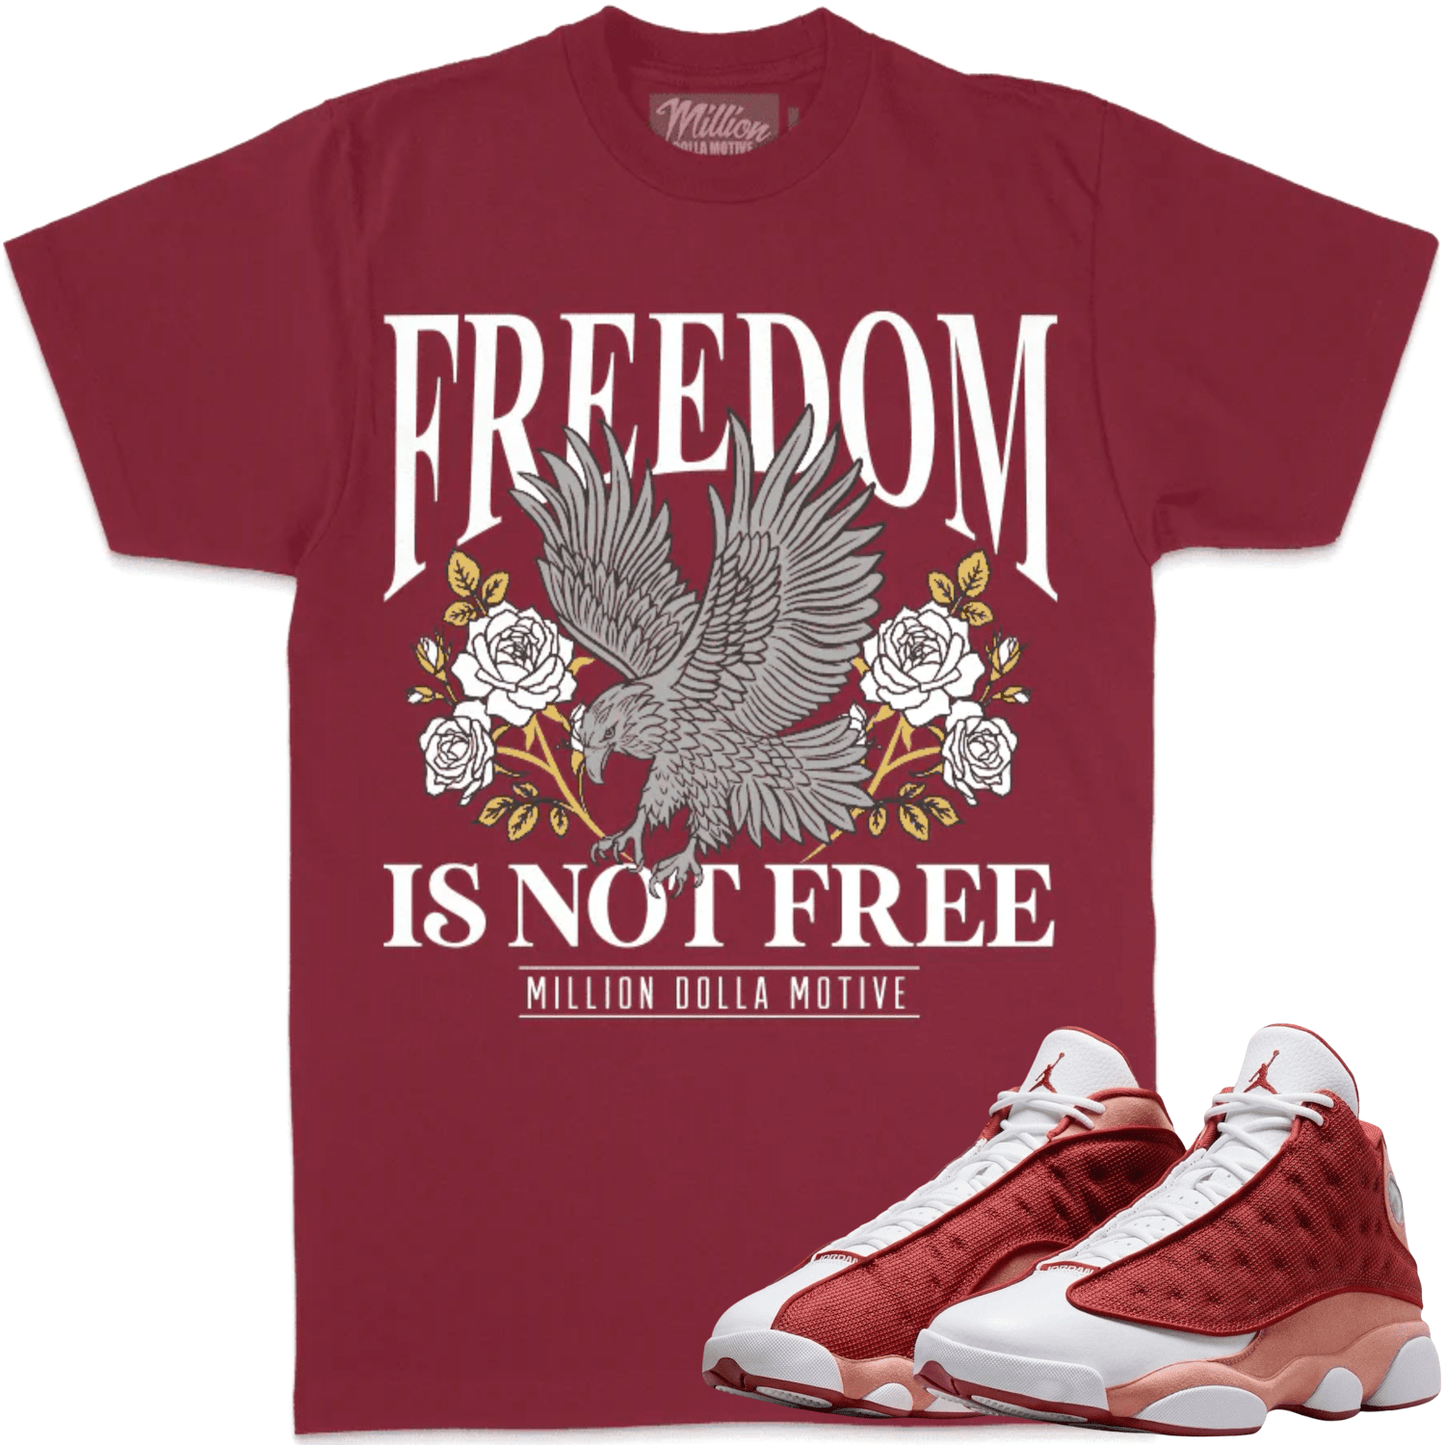 Dune Red 13s Shirt - Jordan 13 Dune Red Sneaker Tees - Freedom